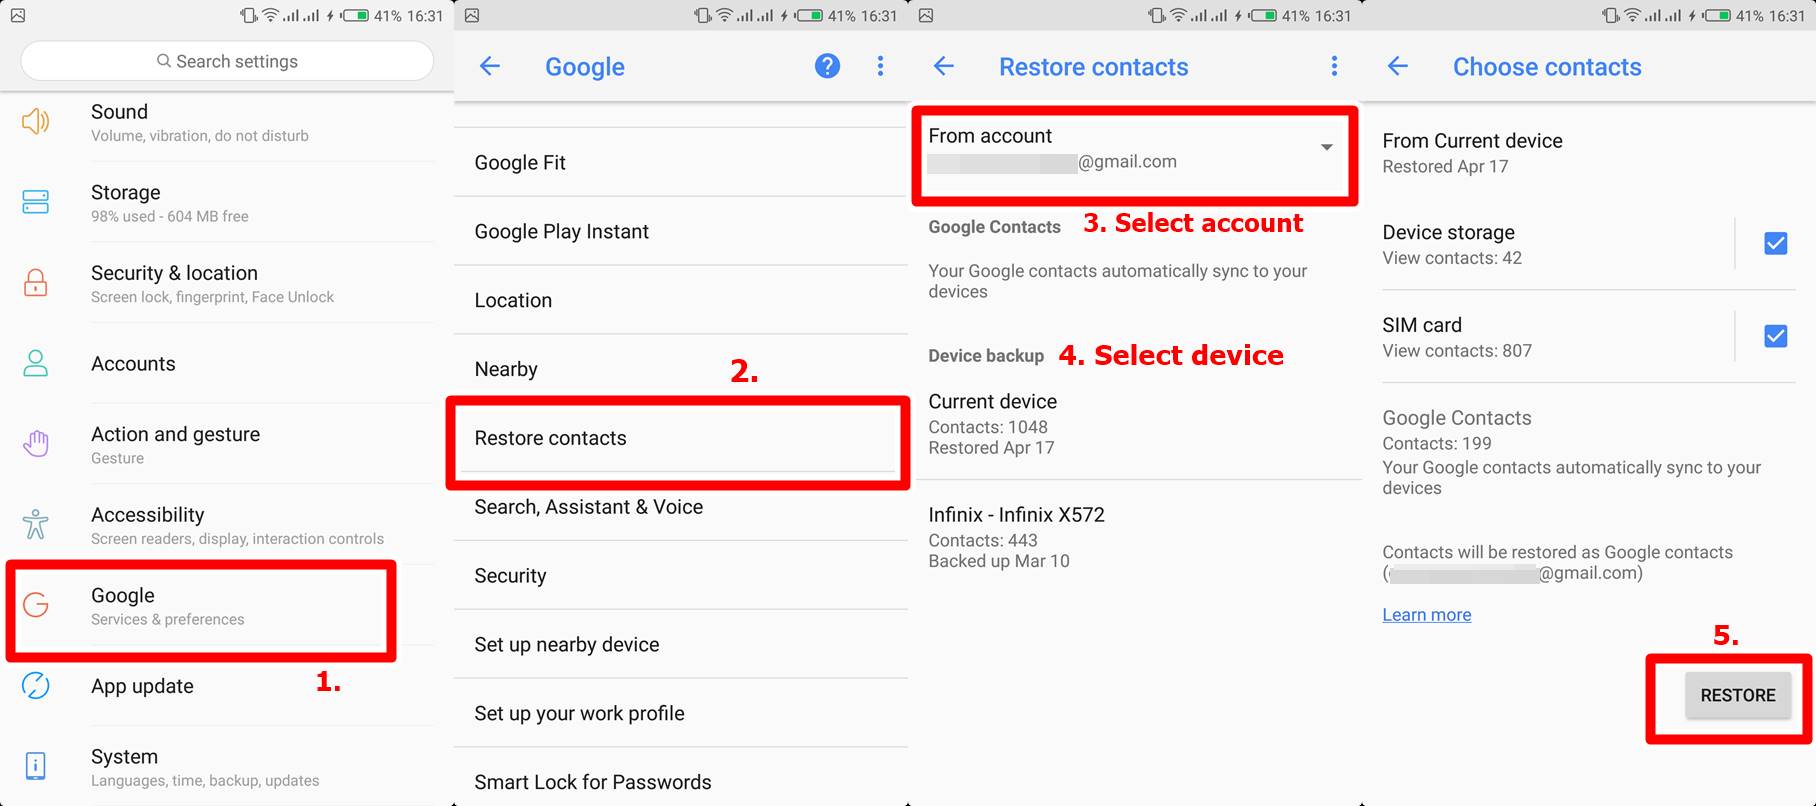 Контакты гугл вход. Google contacts. Have Google contact automatically sync device.